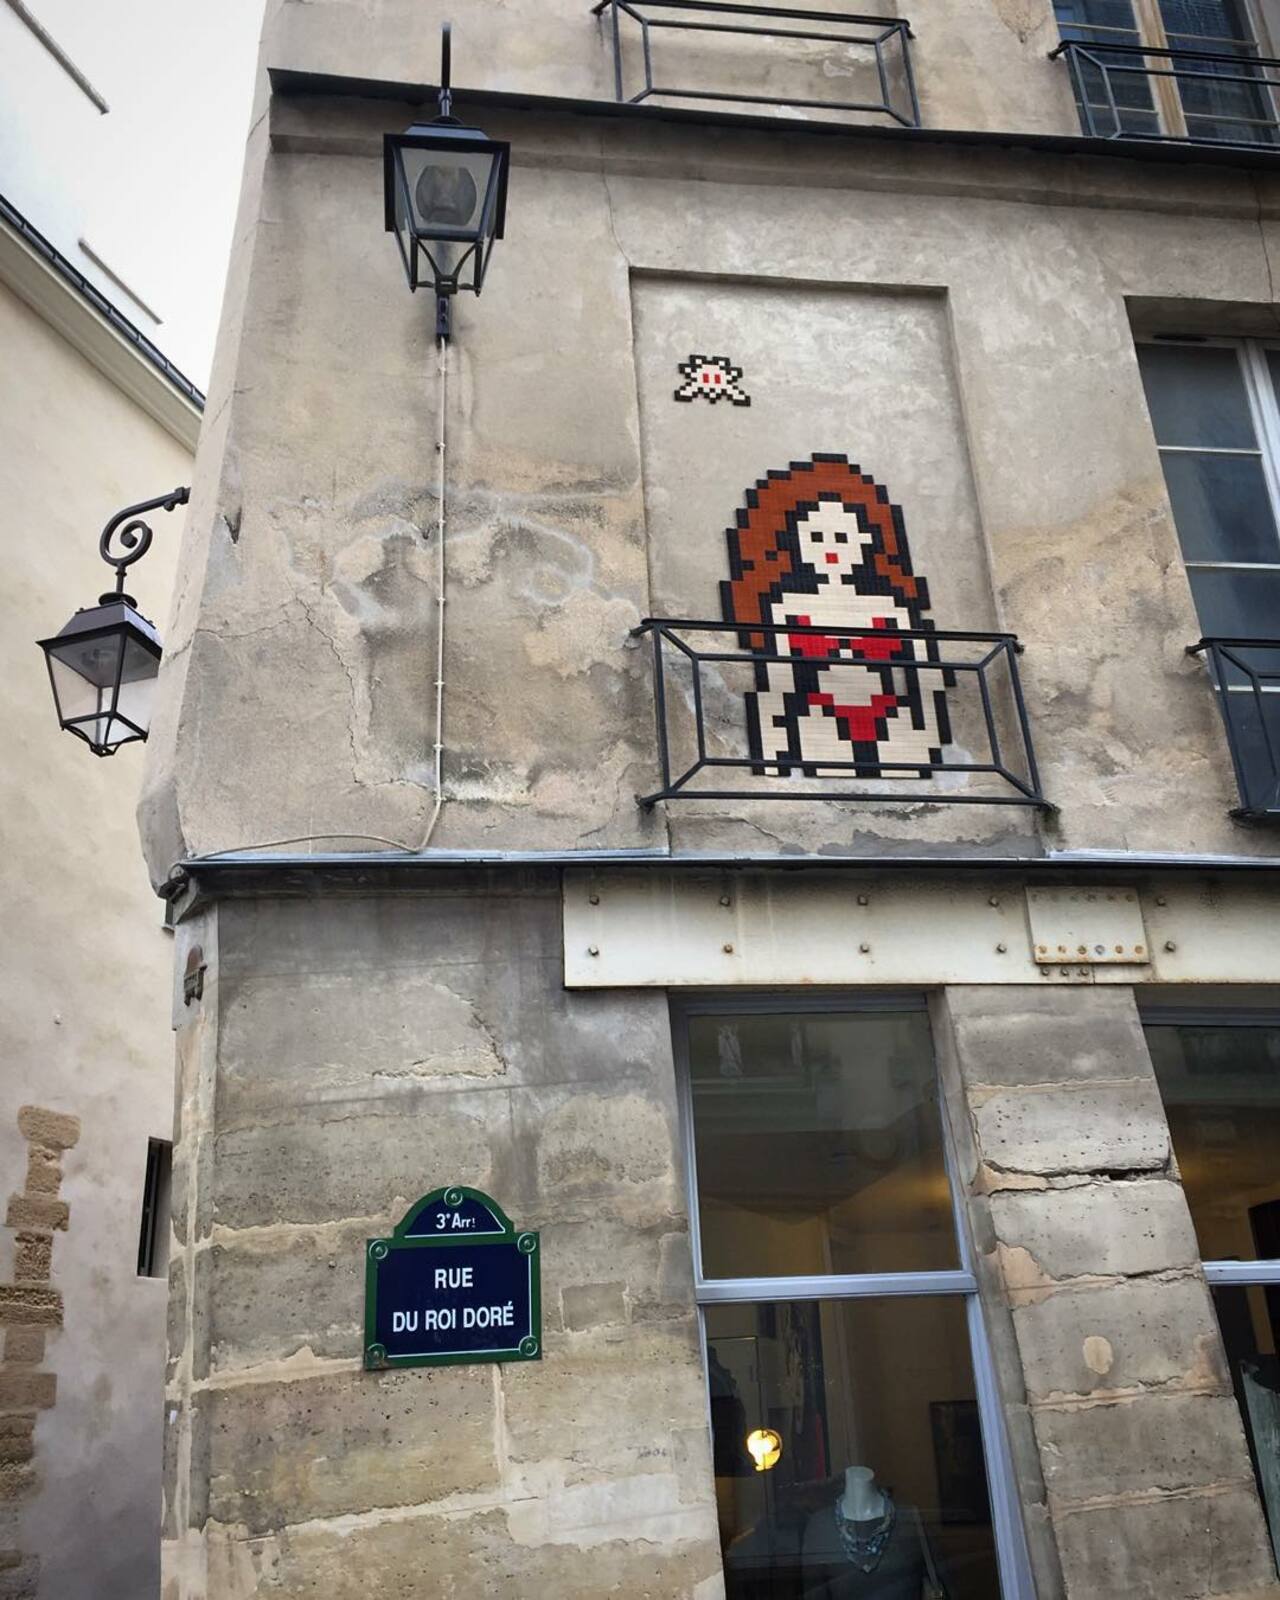 http://ift.tt/1KiqpQt #Paris #graffiti photo by martincoady http://ift.tt/1hLQ9KJ #StreetArt http://t.co/V2bGvUaYc4